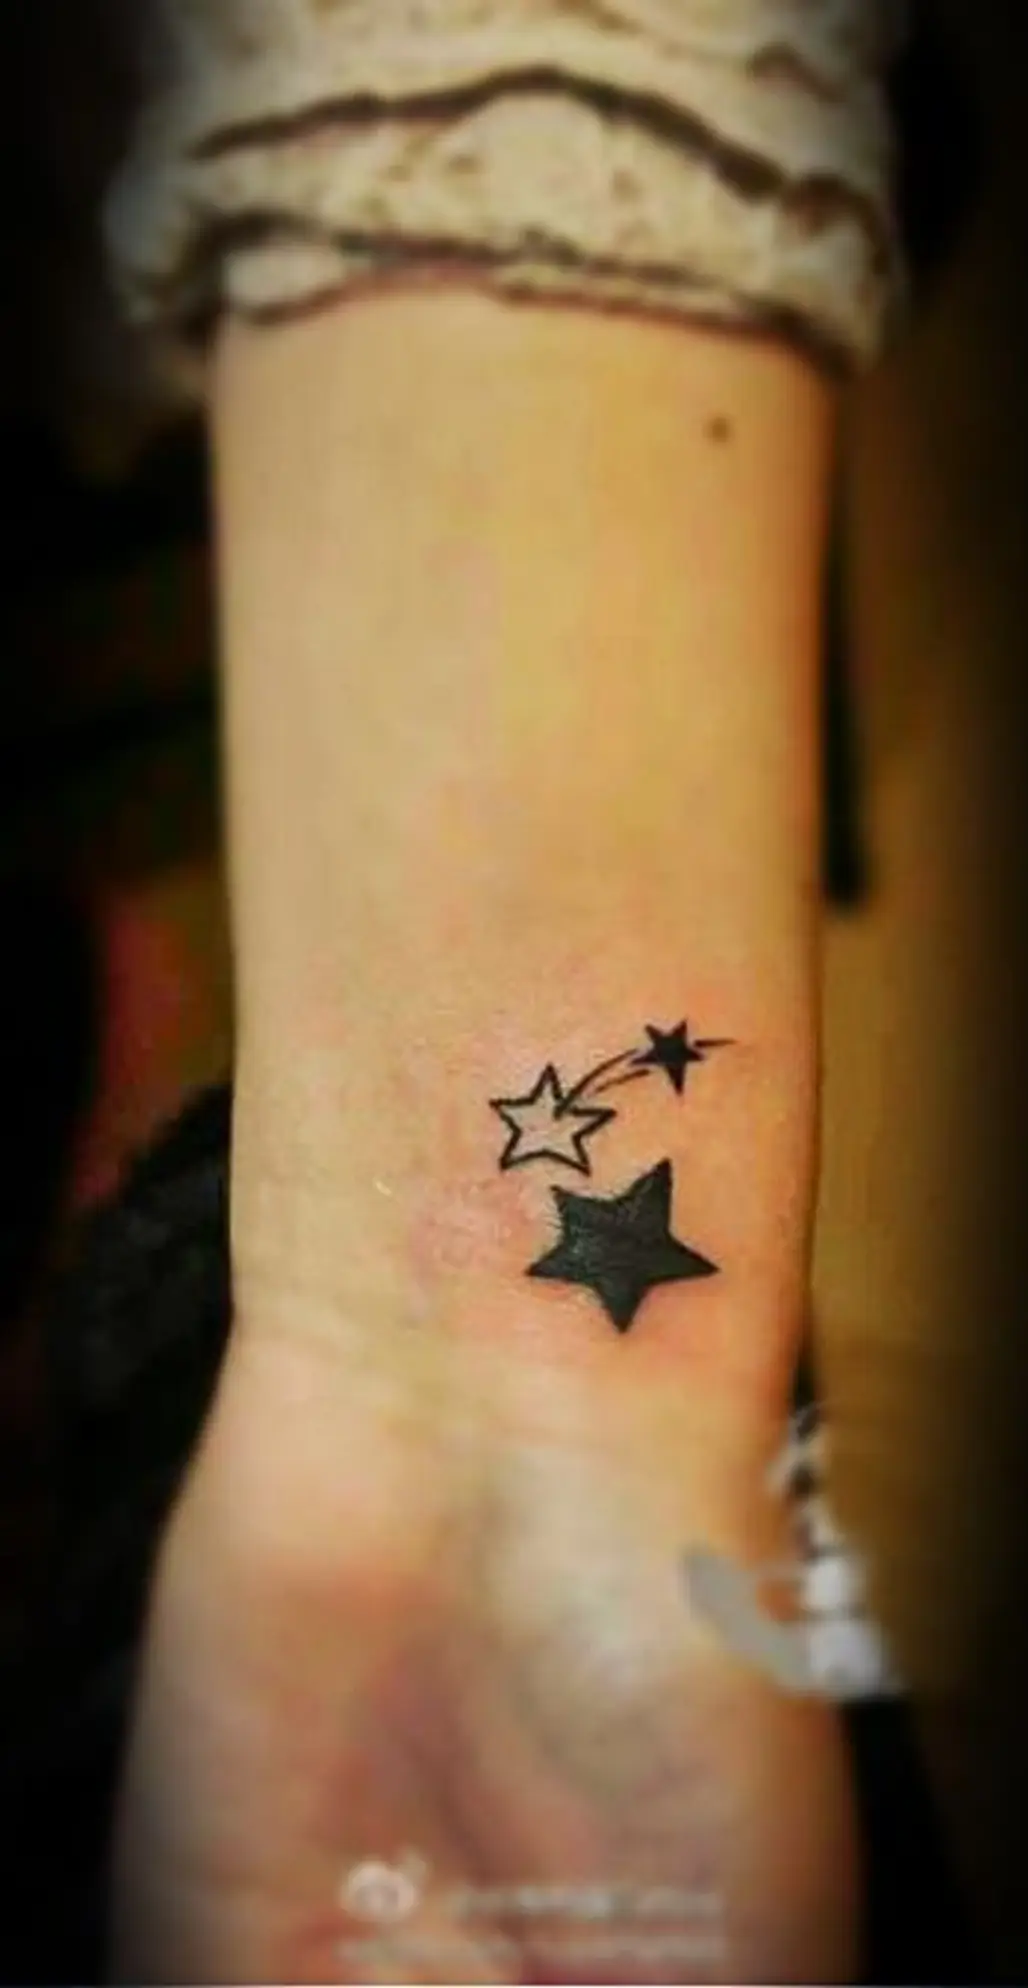 tattoo,skin,arm,close up,hand,